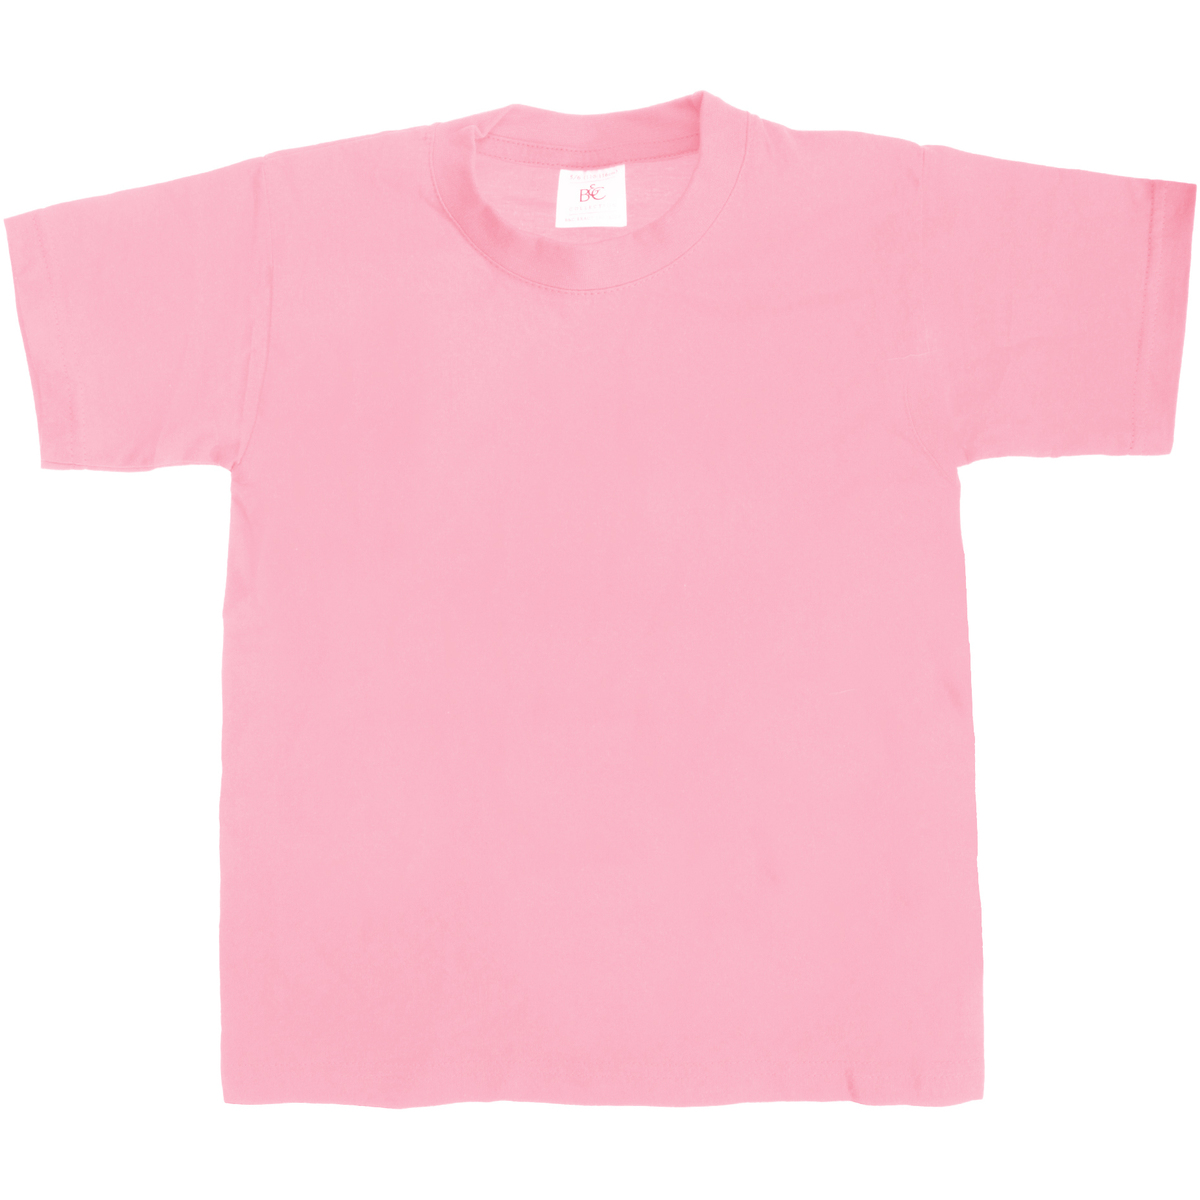 Vêtements Enfant Cotton Pocket Detailed Check Classic Collar Long Sleeve Shirt TK301 Rouge